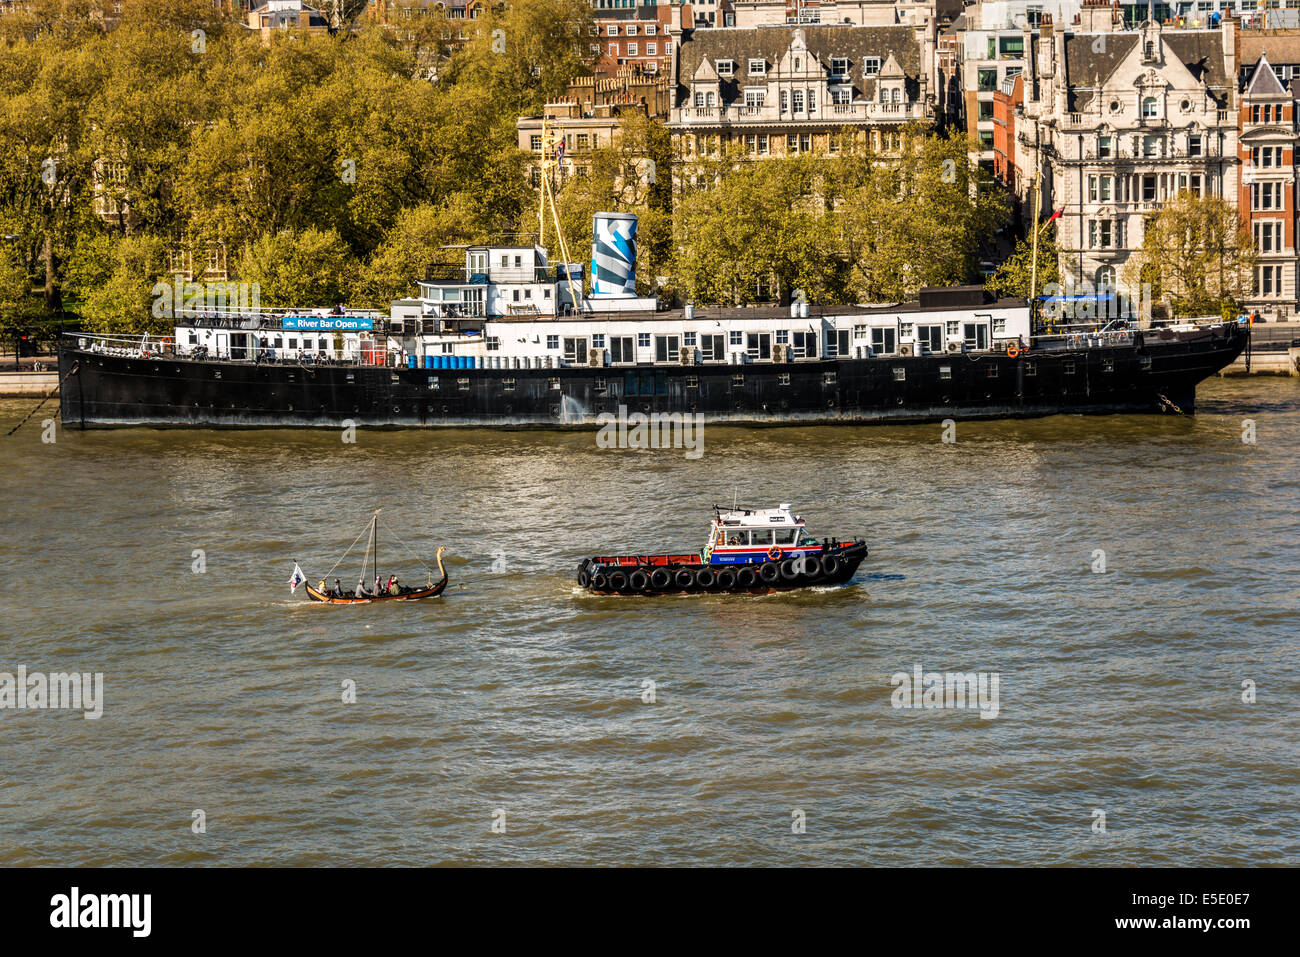 Ship Photo London Tug Lord WaverleyTaken On The Thames 6X4 10X15 Photograph 